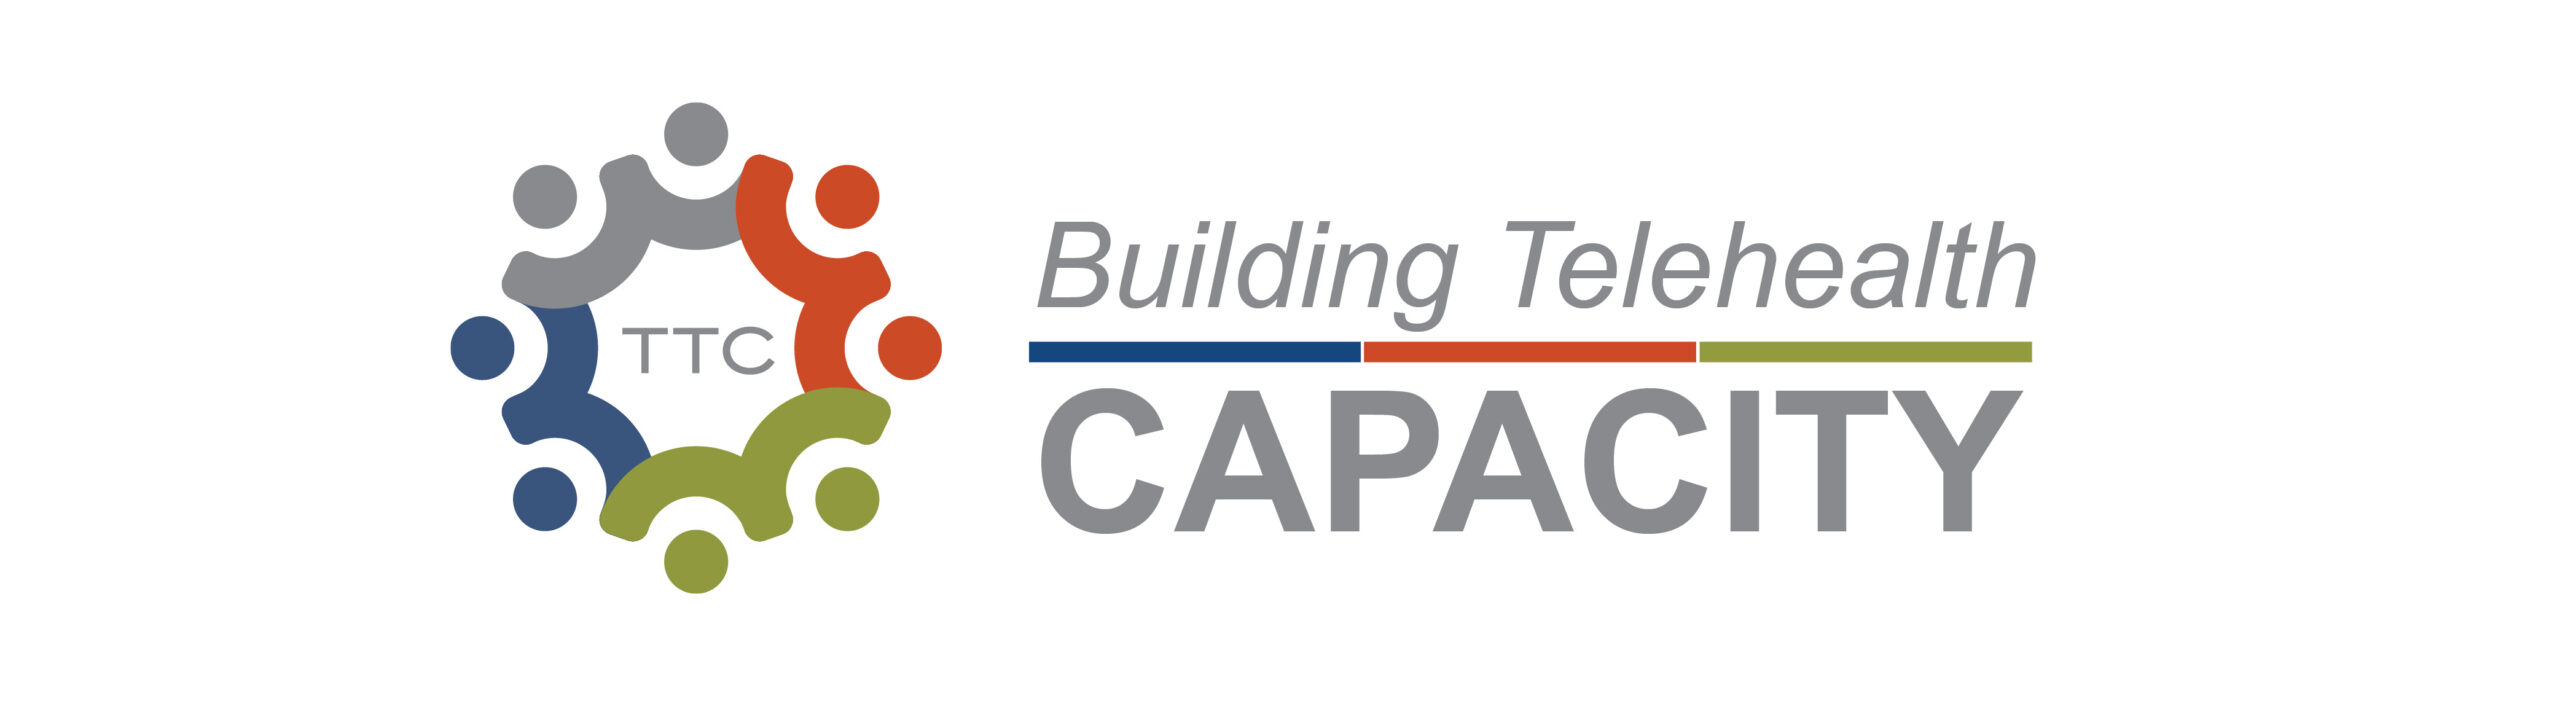 TTC building telehealth capacity logo